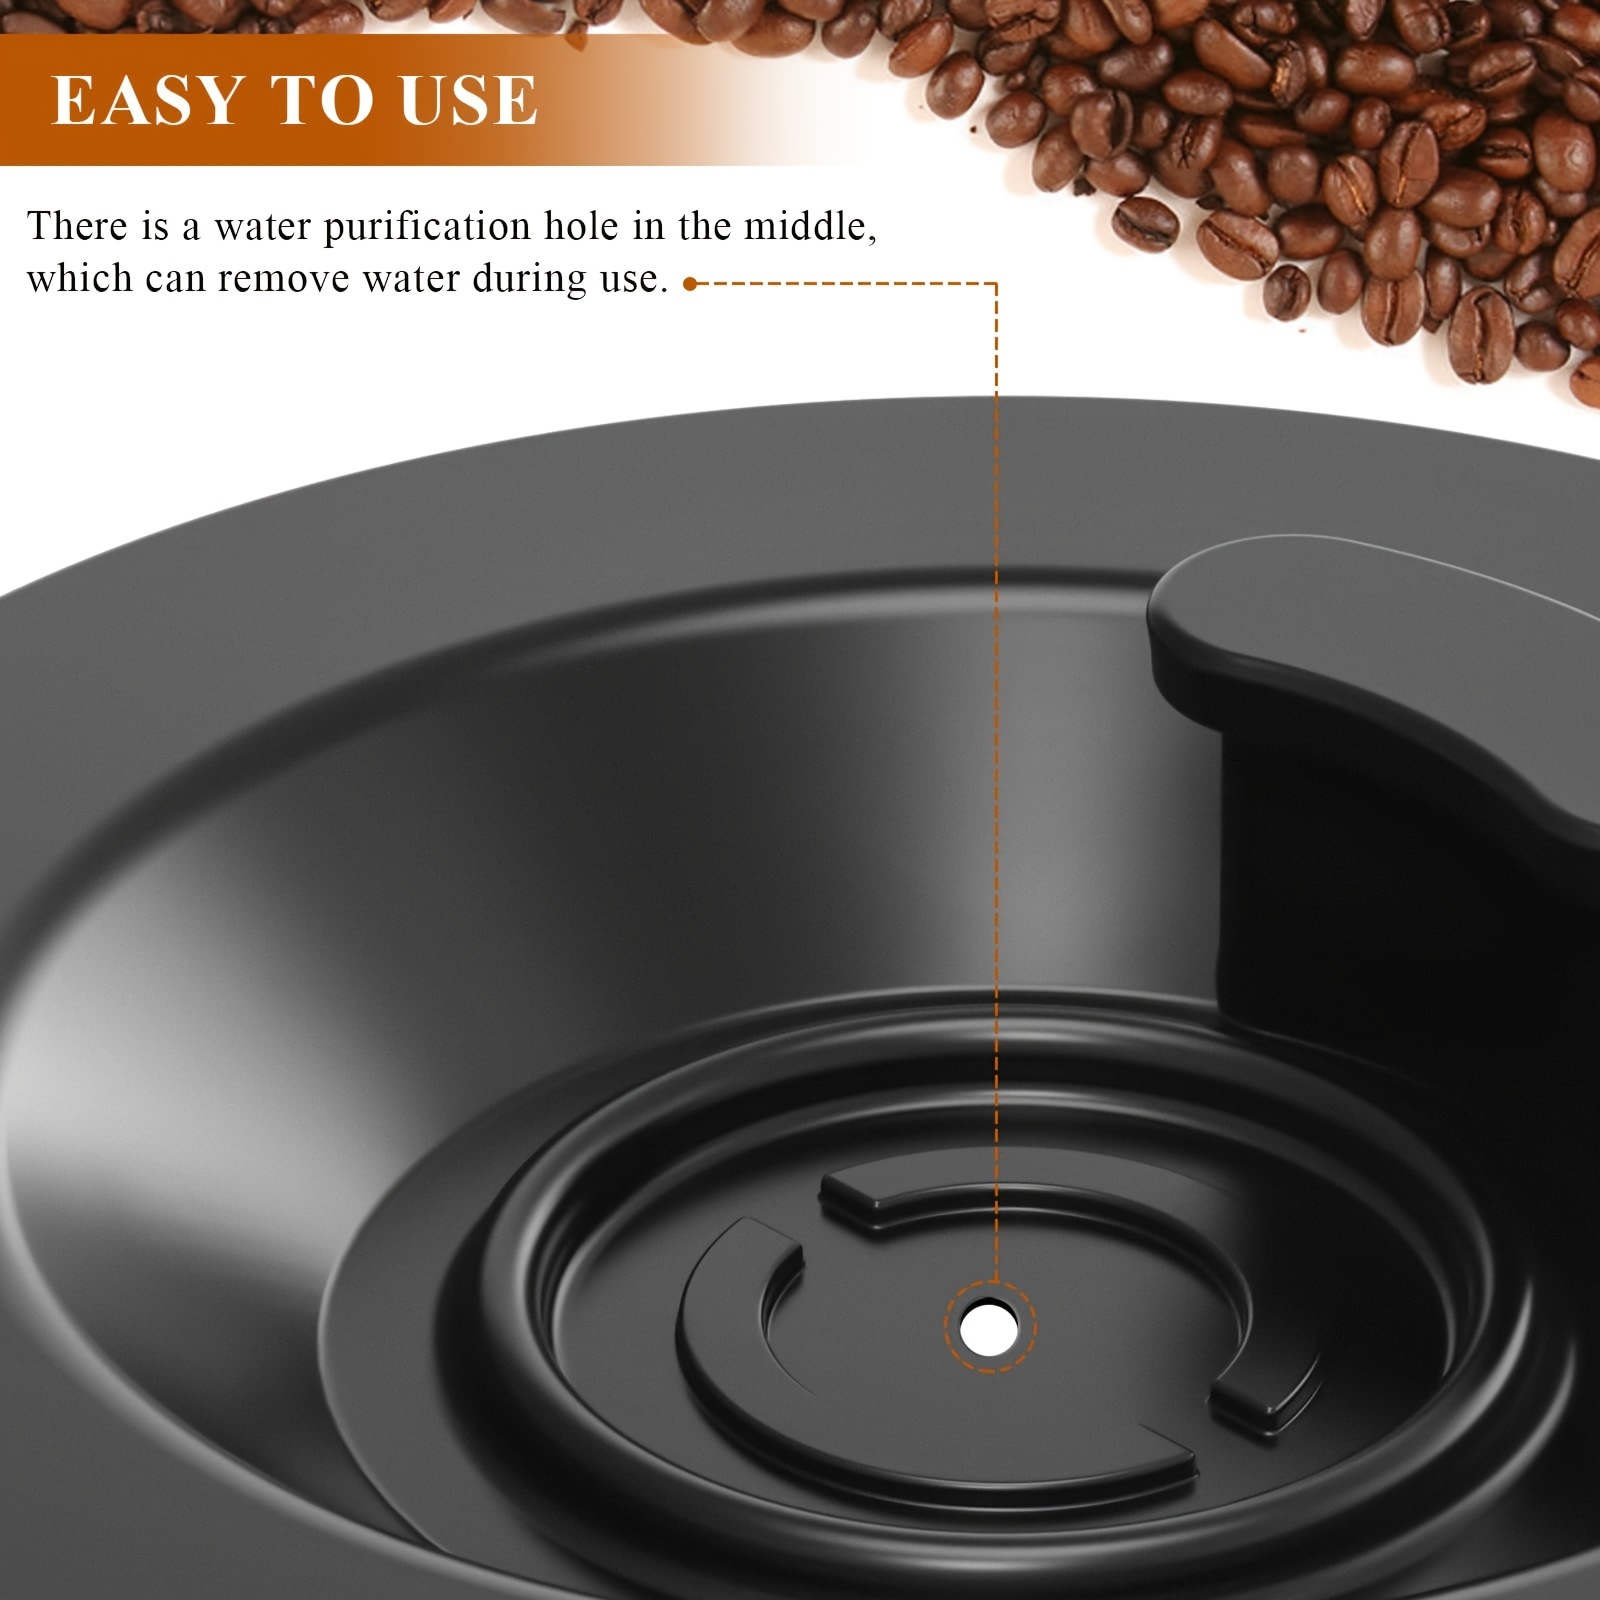 2PCS Espresso Backflush Cleaning Disc for Breville Espresso